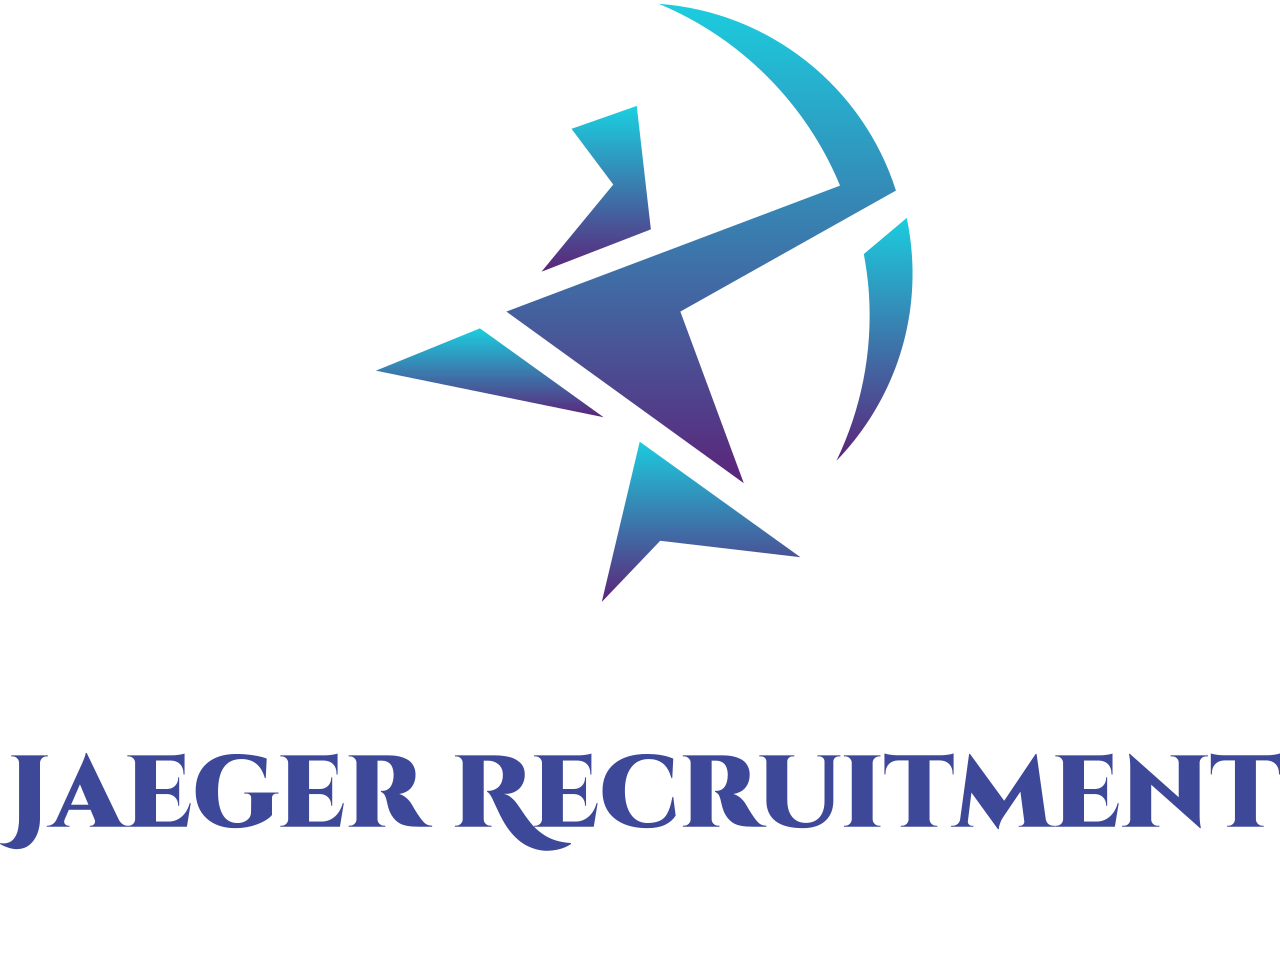 Jaeger Recruitment's web page